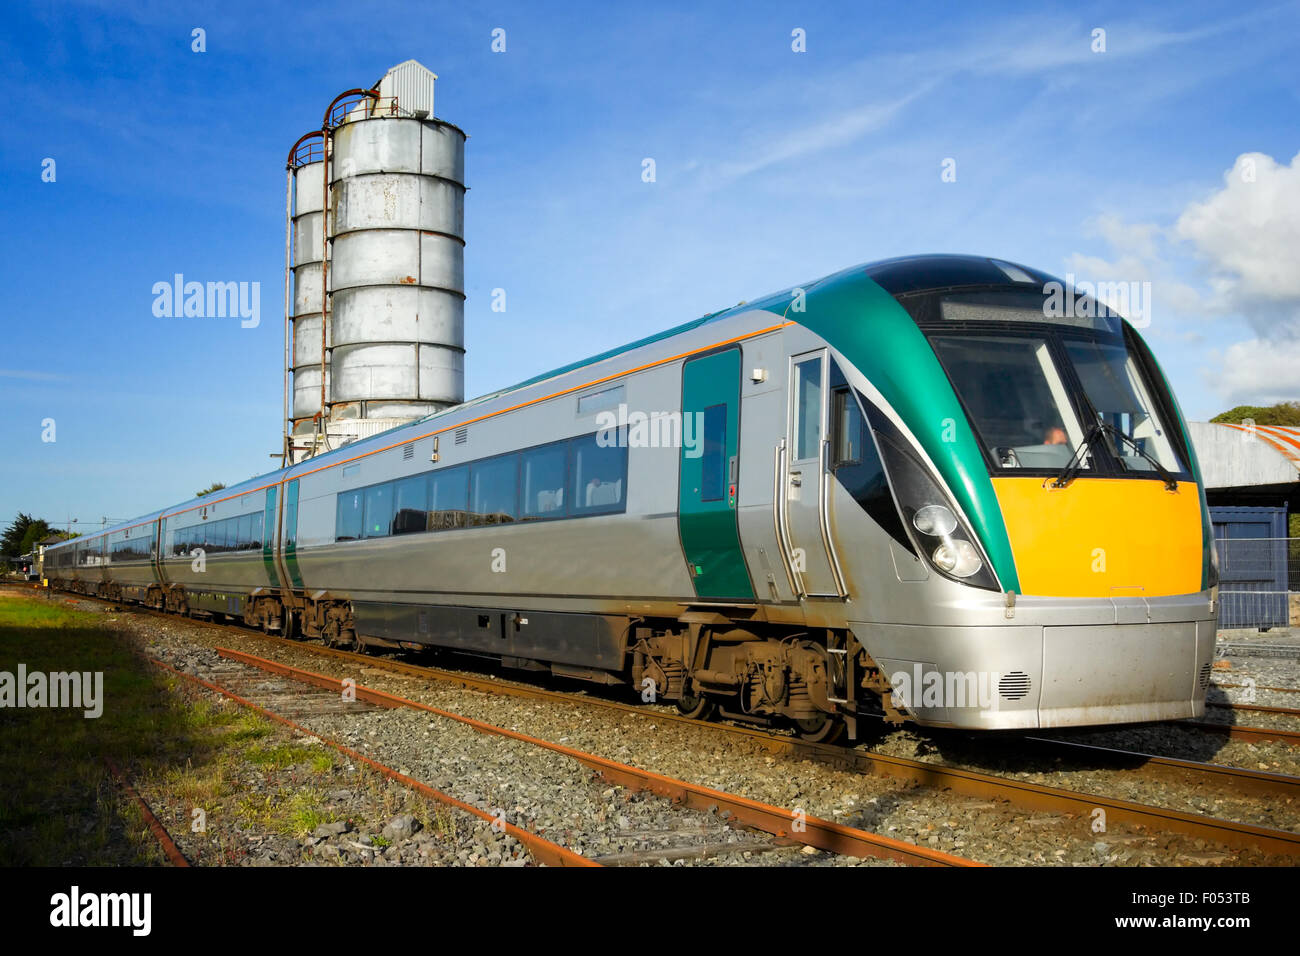 Passenger train in motion Stock Photo